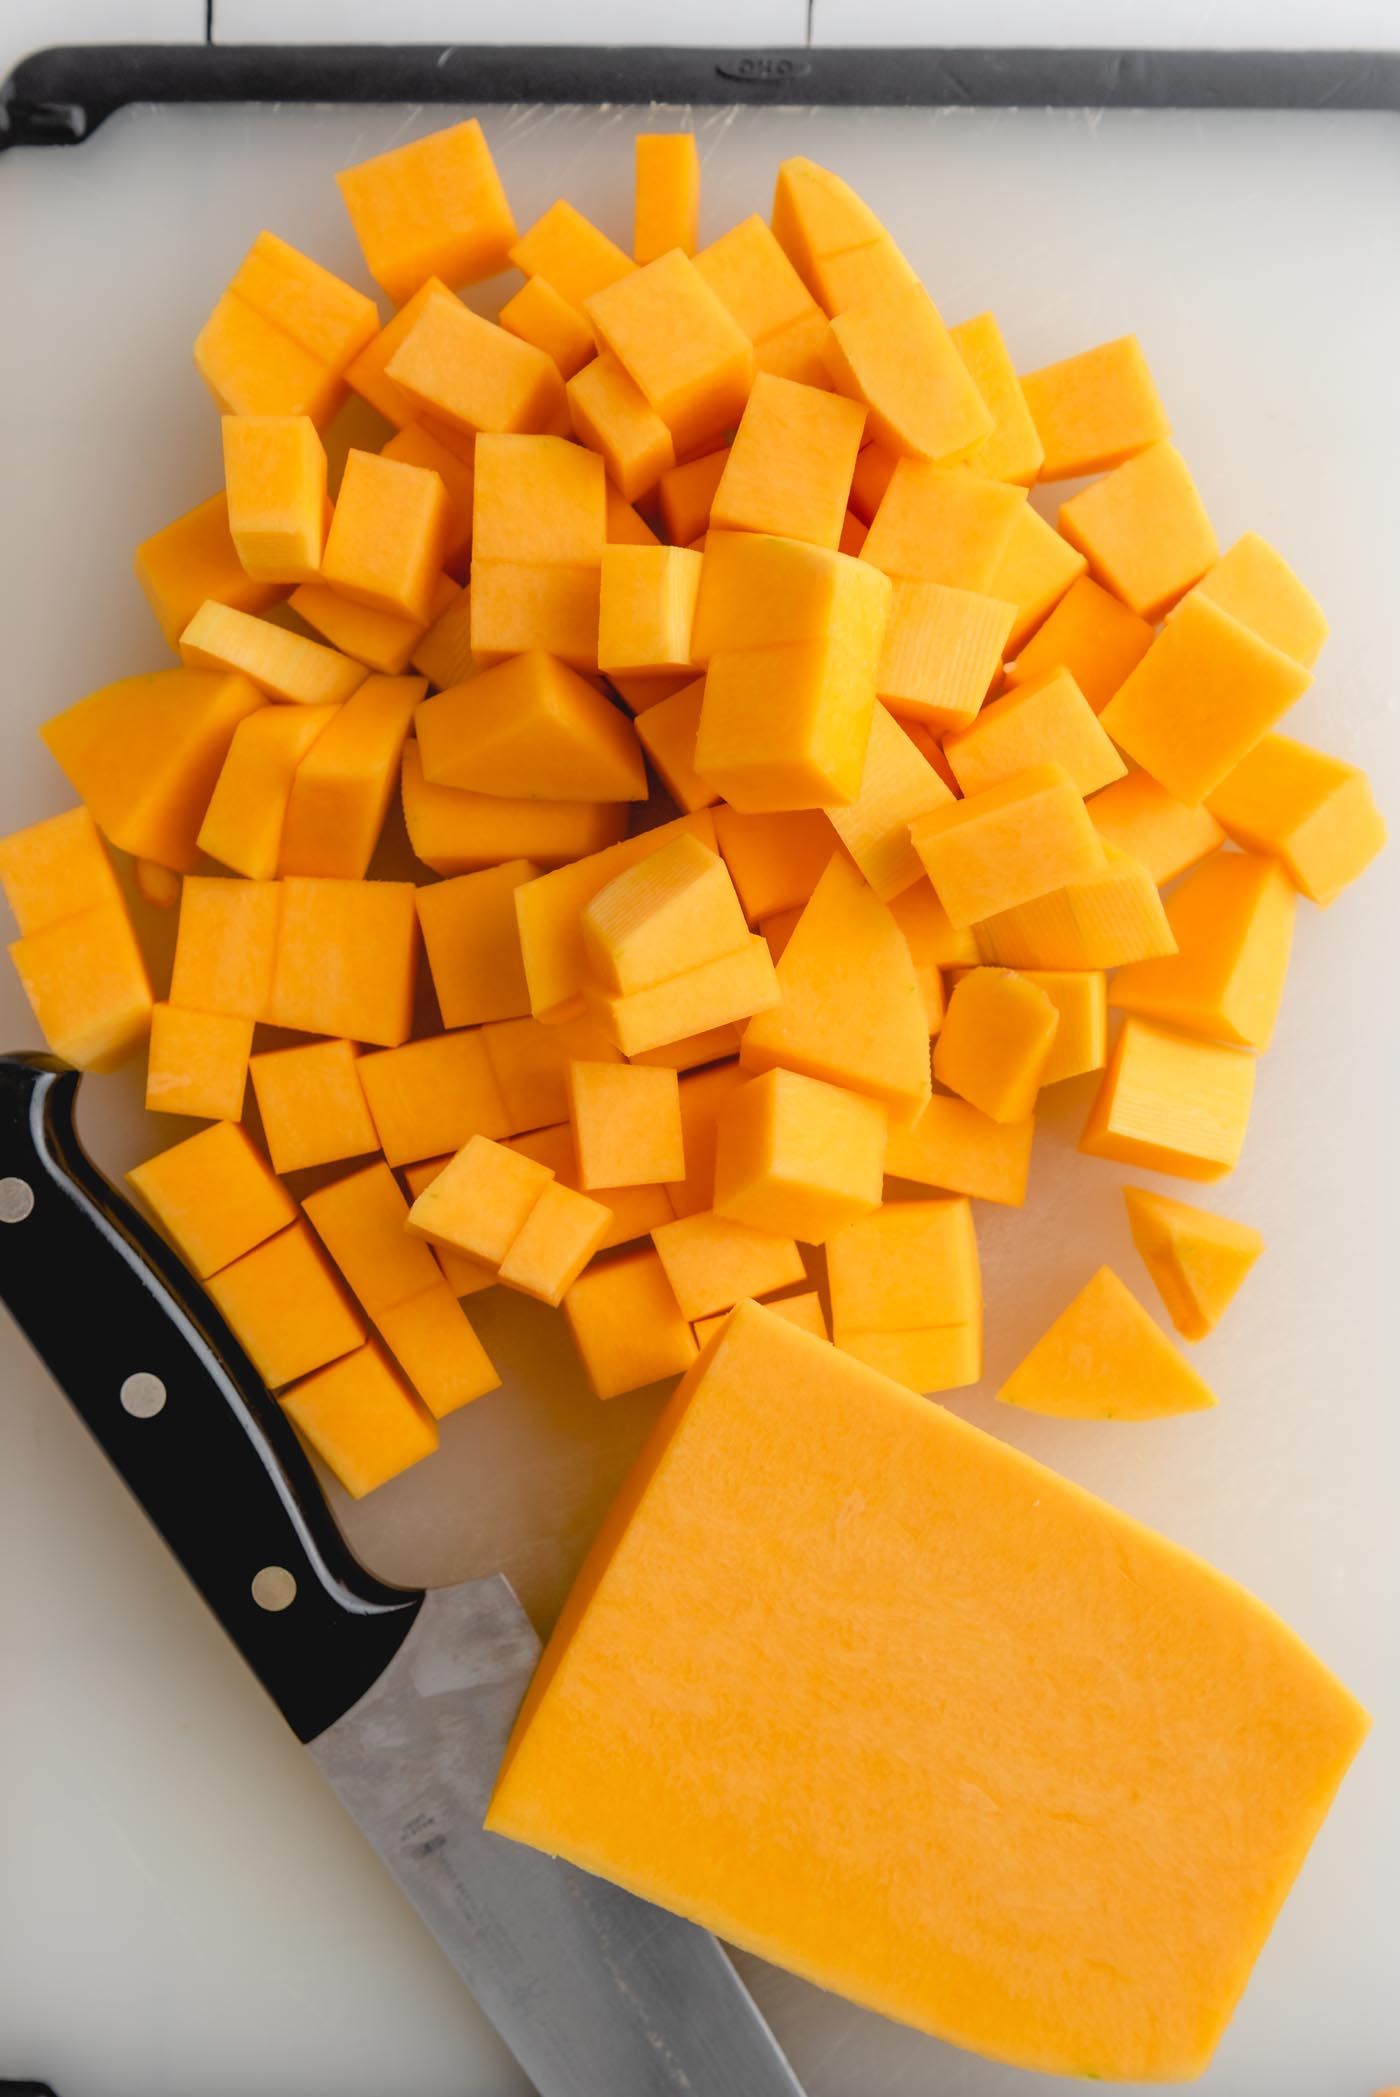 Butternut squash cut into 1-inch cubes on a cutting board.